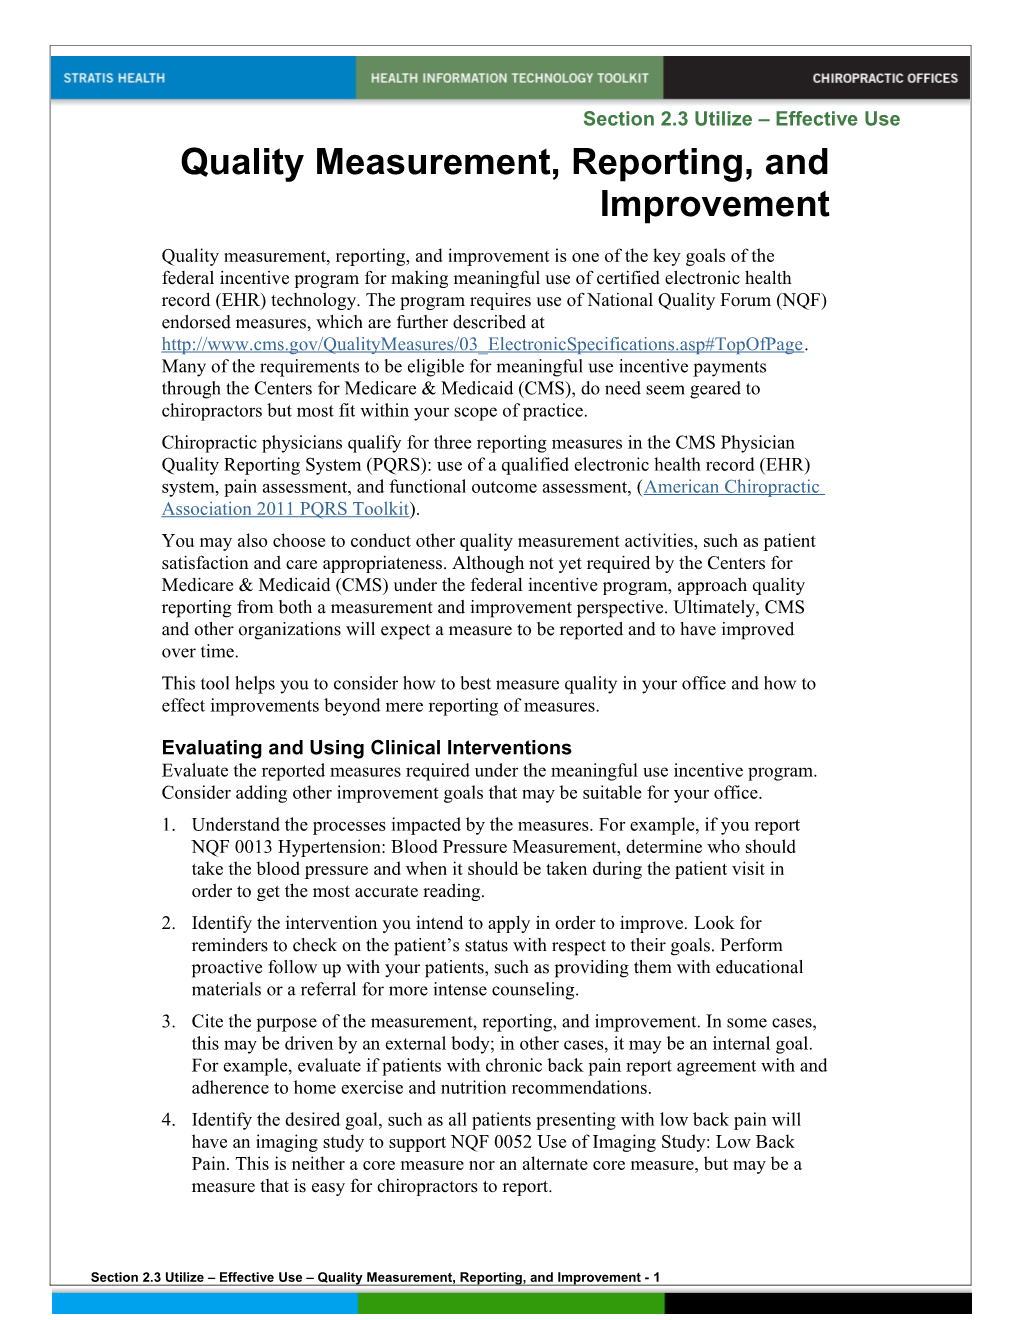 2.3 Quality Measurement Reporting Improvement